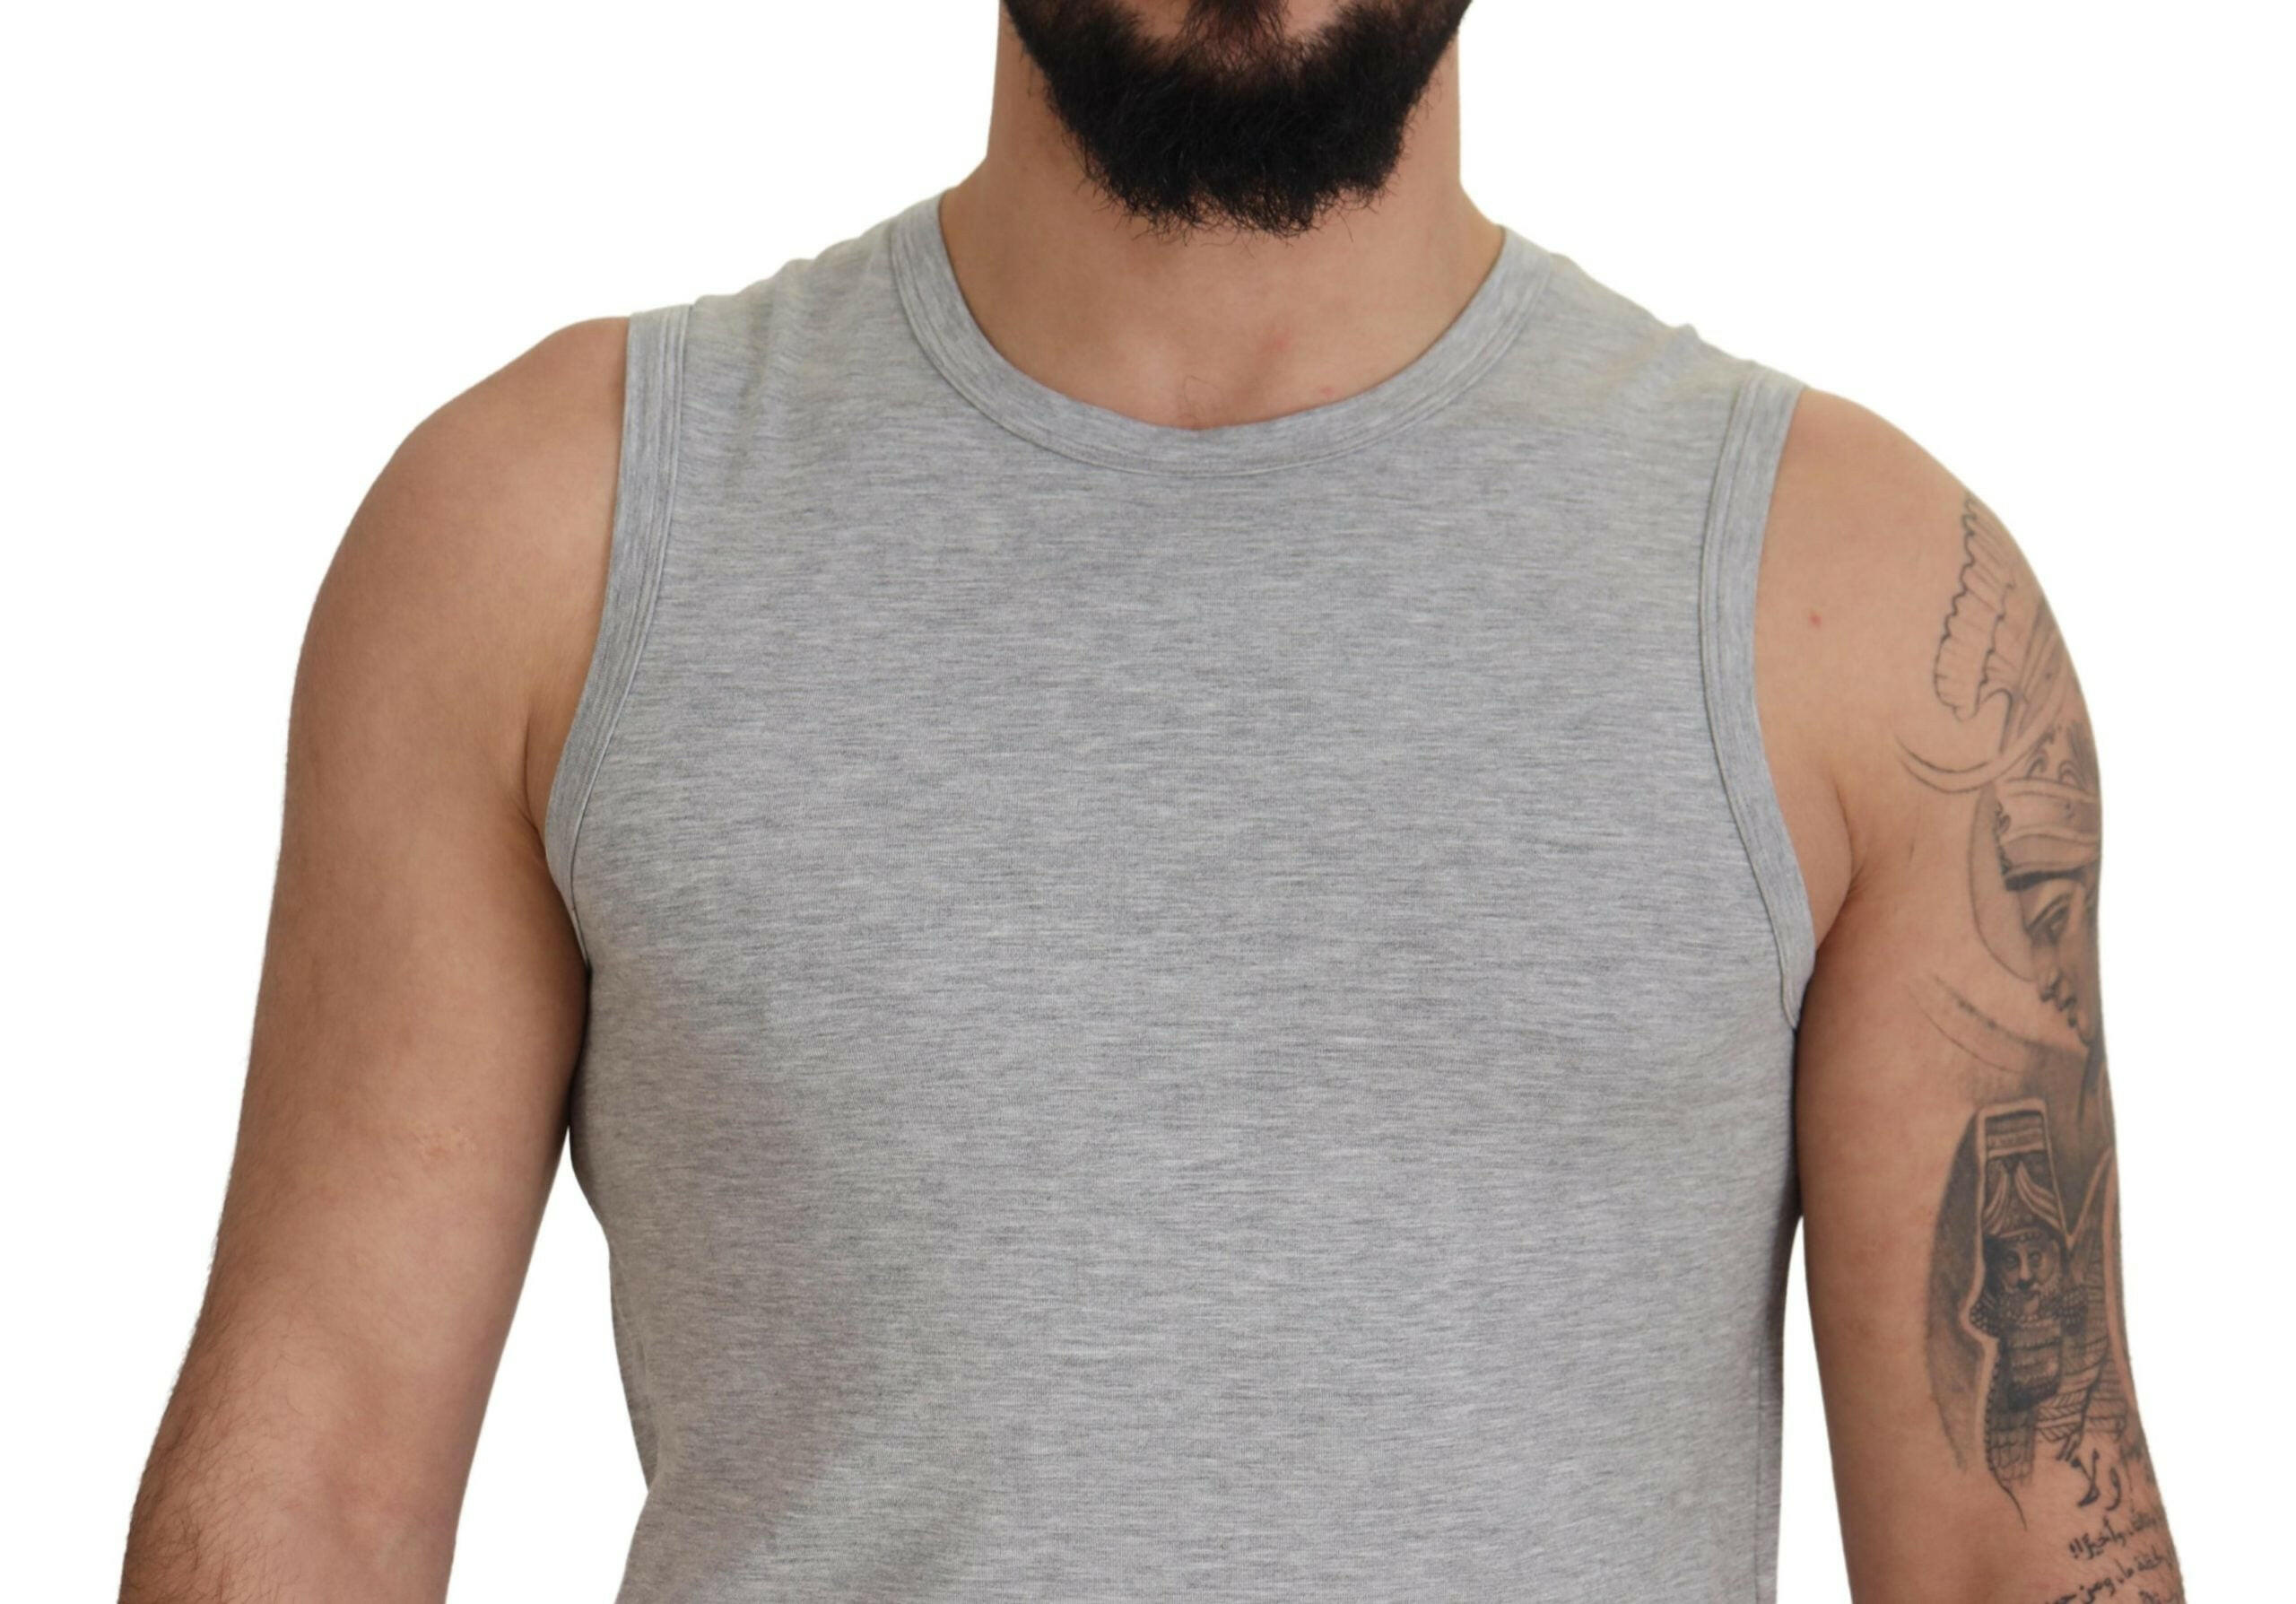 Ermanno Scervino Grey Sleeveless Men Pullover T-shirt - GENUINE AUTHENTIC BRAND LLC  